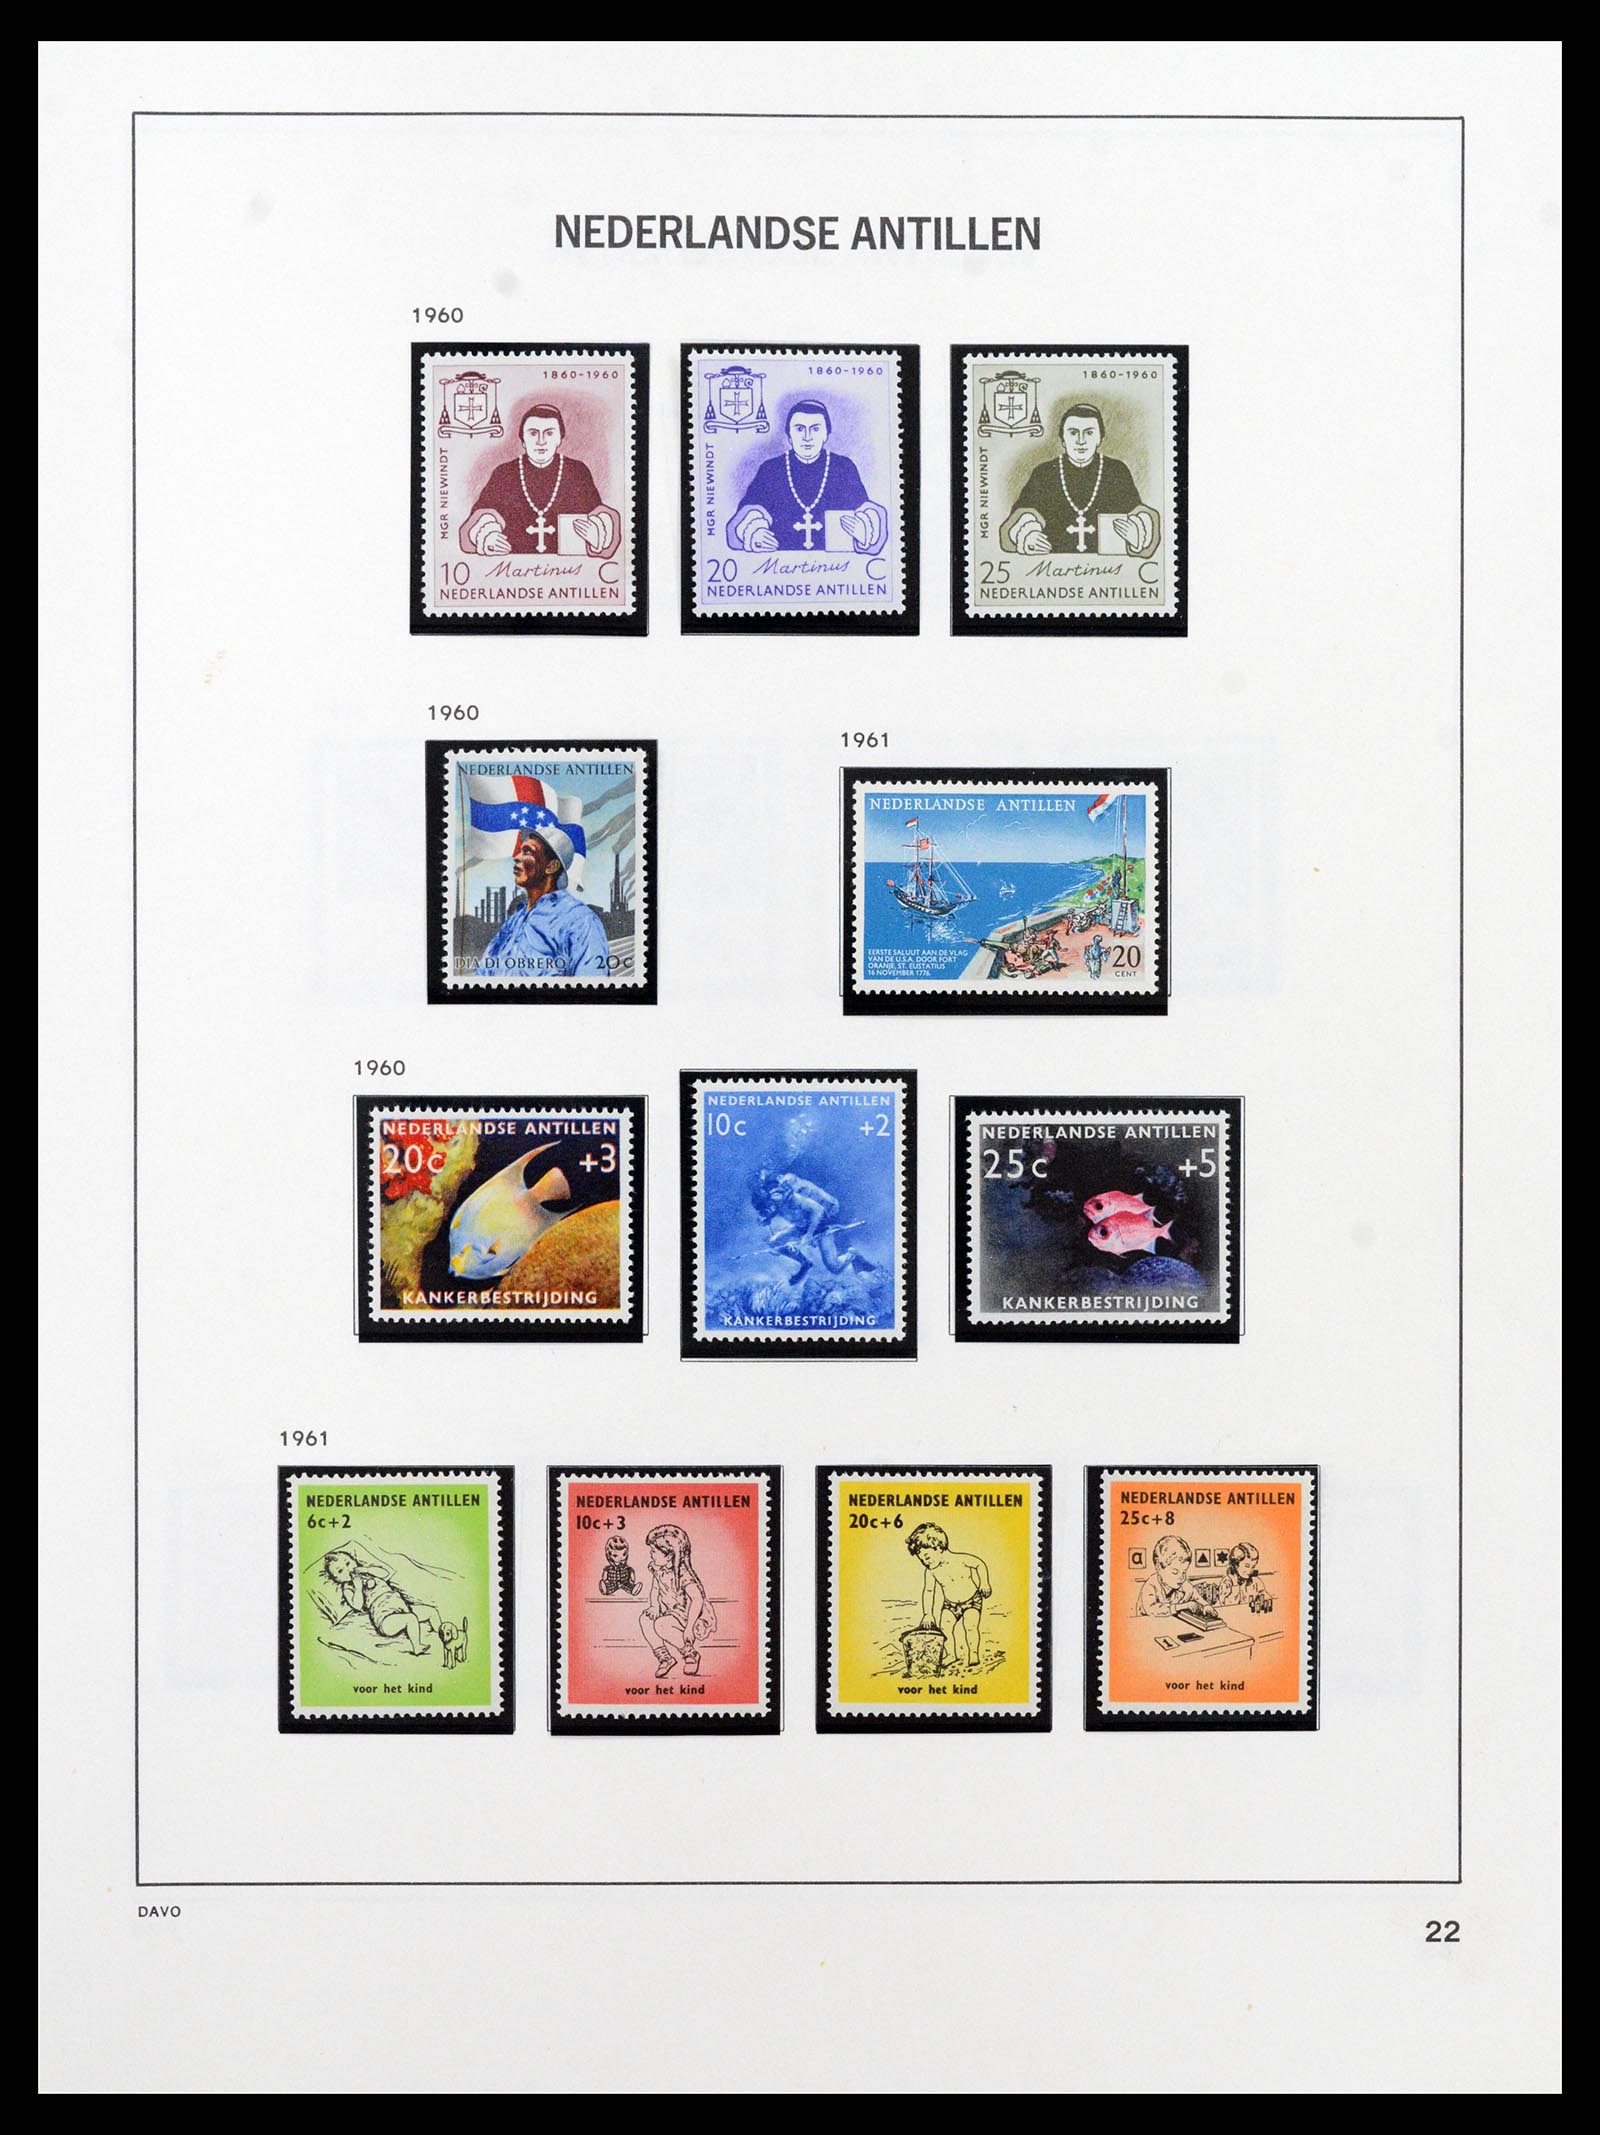 37682 011 - Stamp collection 37682 Netherlands Antilles.